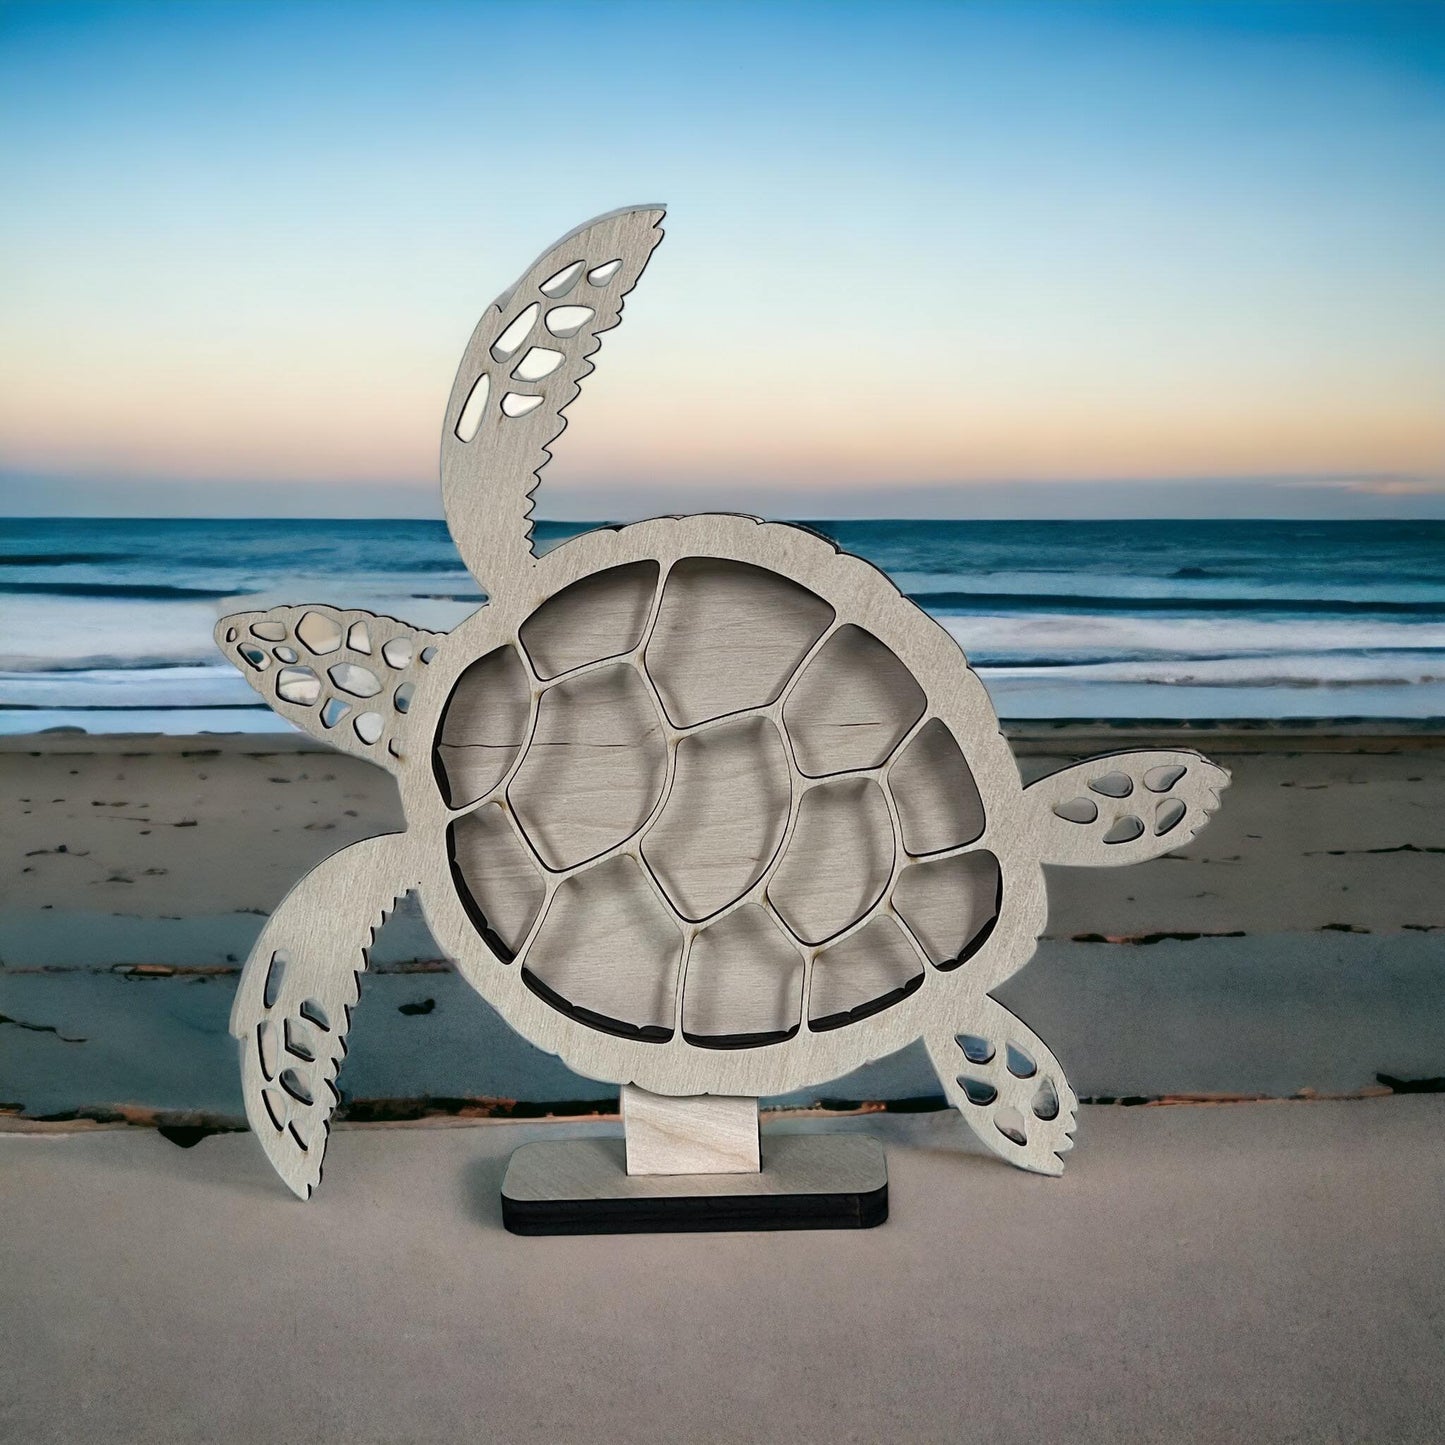 Sea Turtle Shadow Box Display